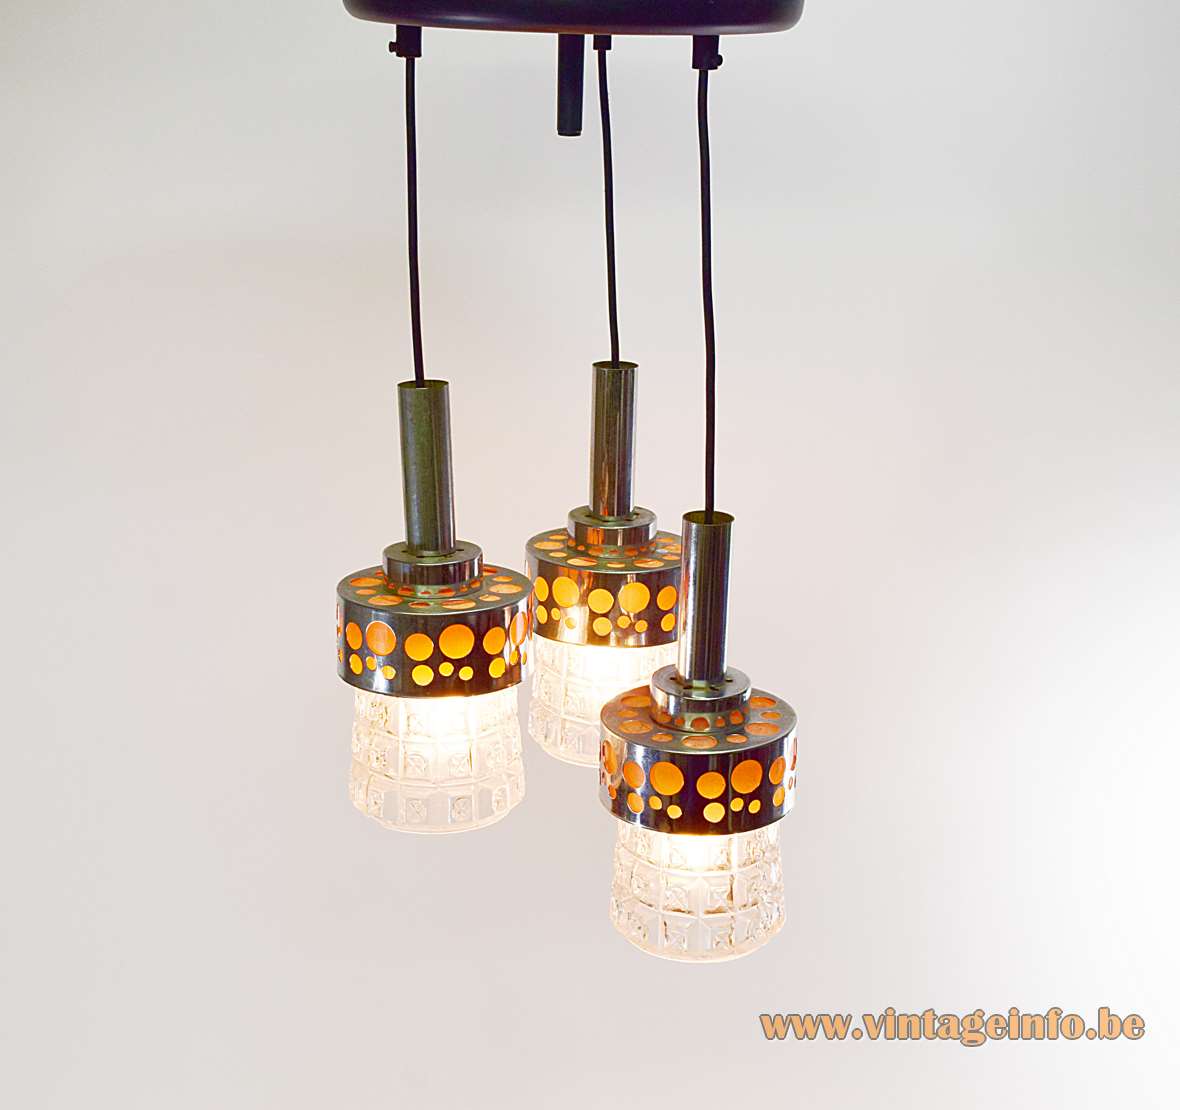 Massive Belgium triple pendant lamp chrome & orange circles pressed glass lampshades 1960s 1970s Raak The Netherlands